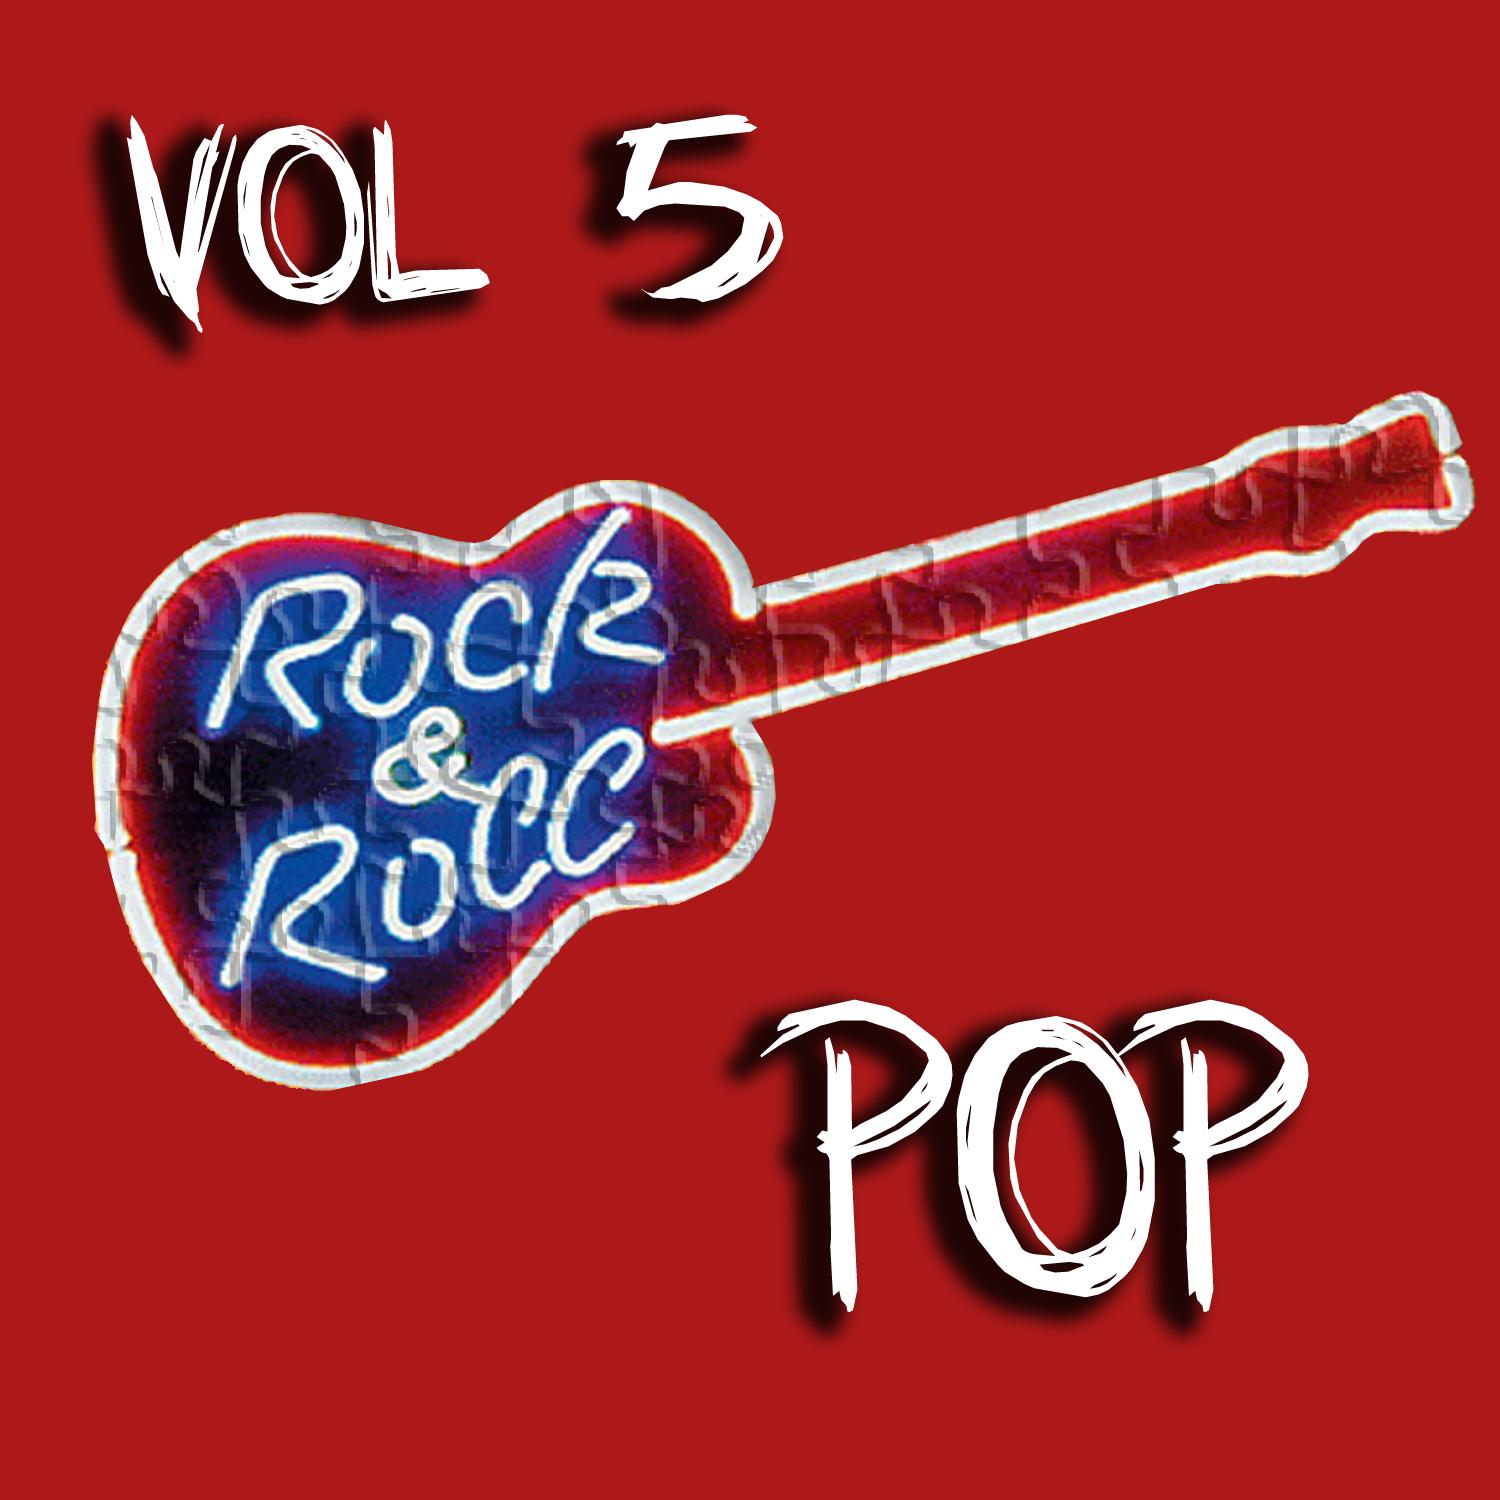 Rock & Roll Pop Vol 5